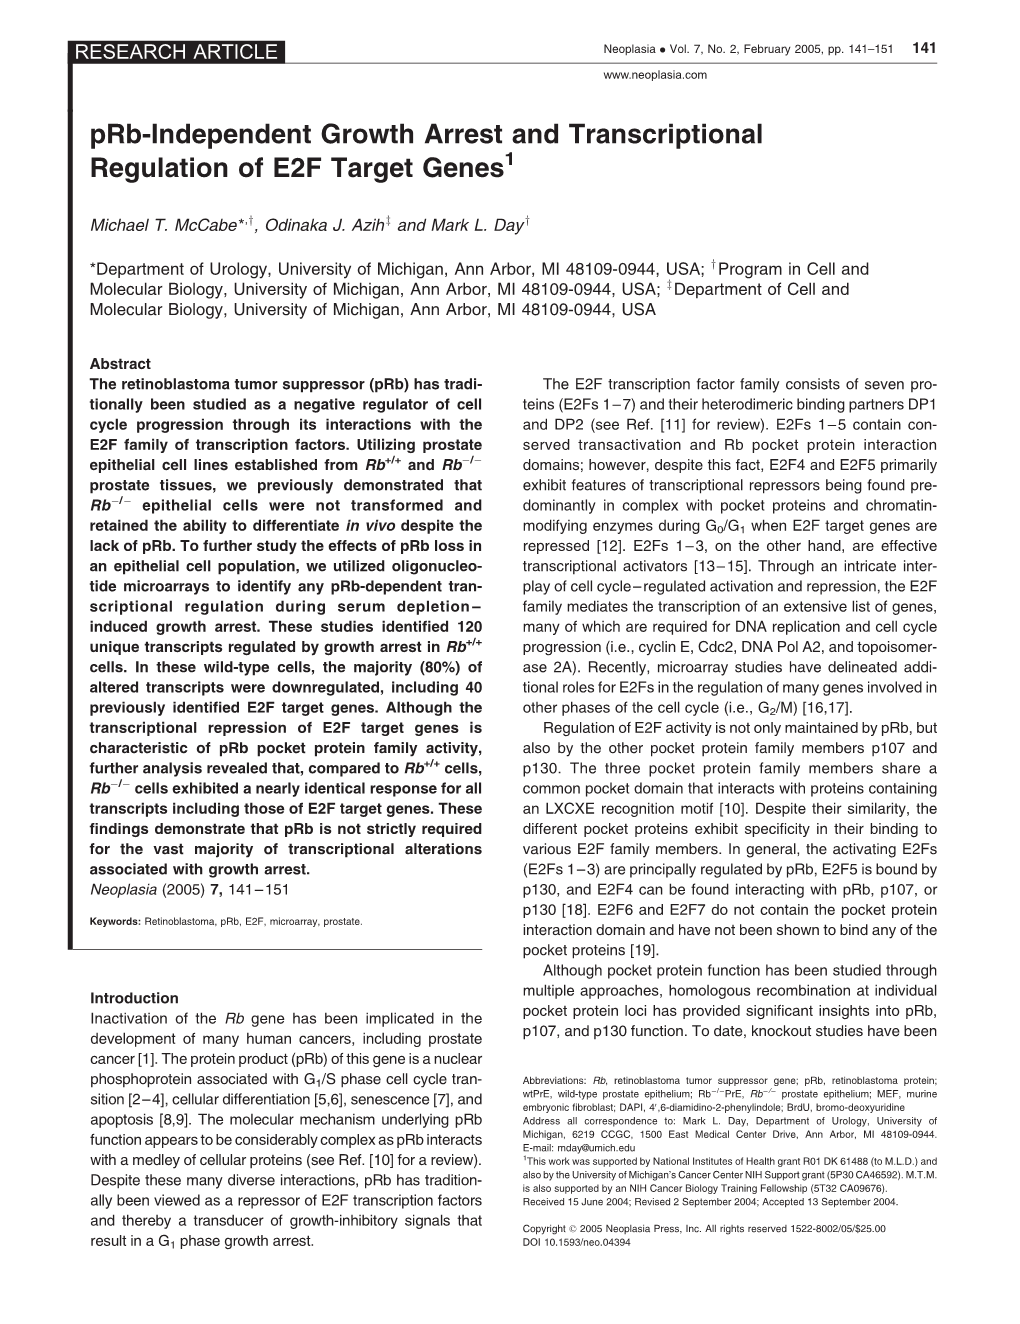 Prb-Independent Growth Arrest and Transcriptional Regulation of E2F Target Genes1